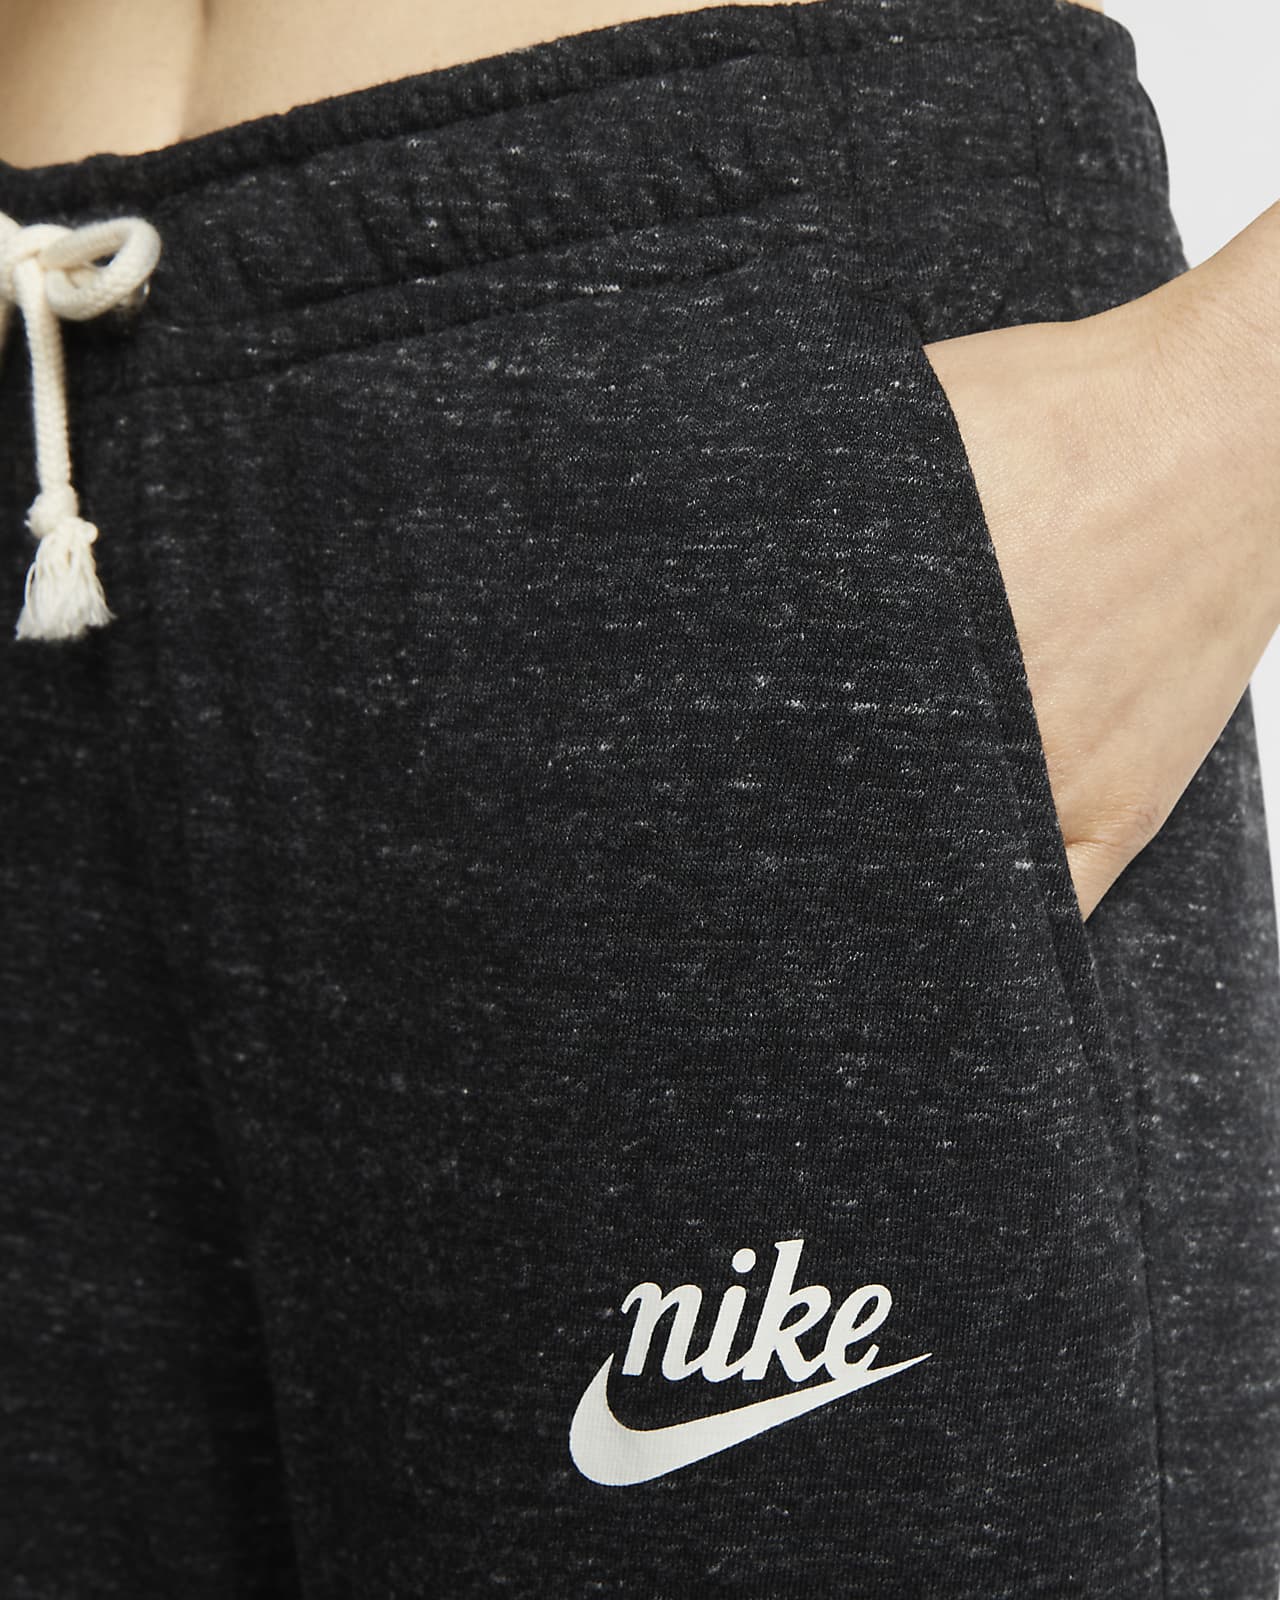 nike sportswear gym vintage women's pants